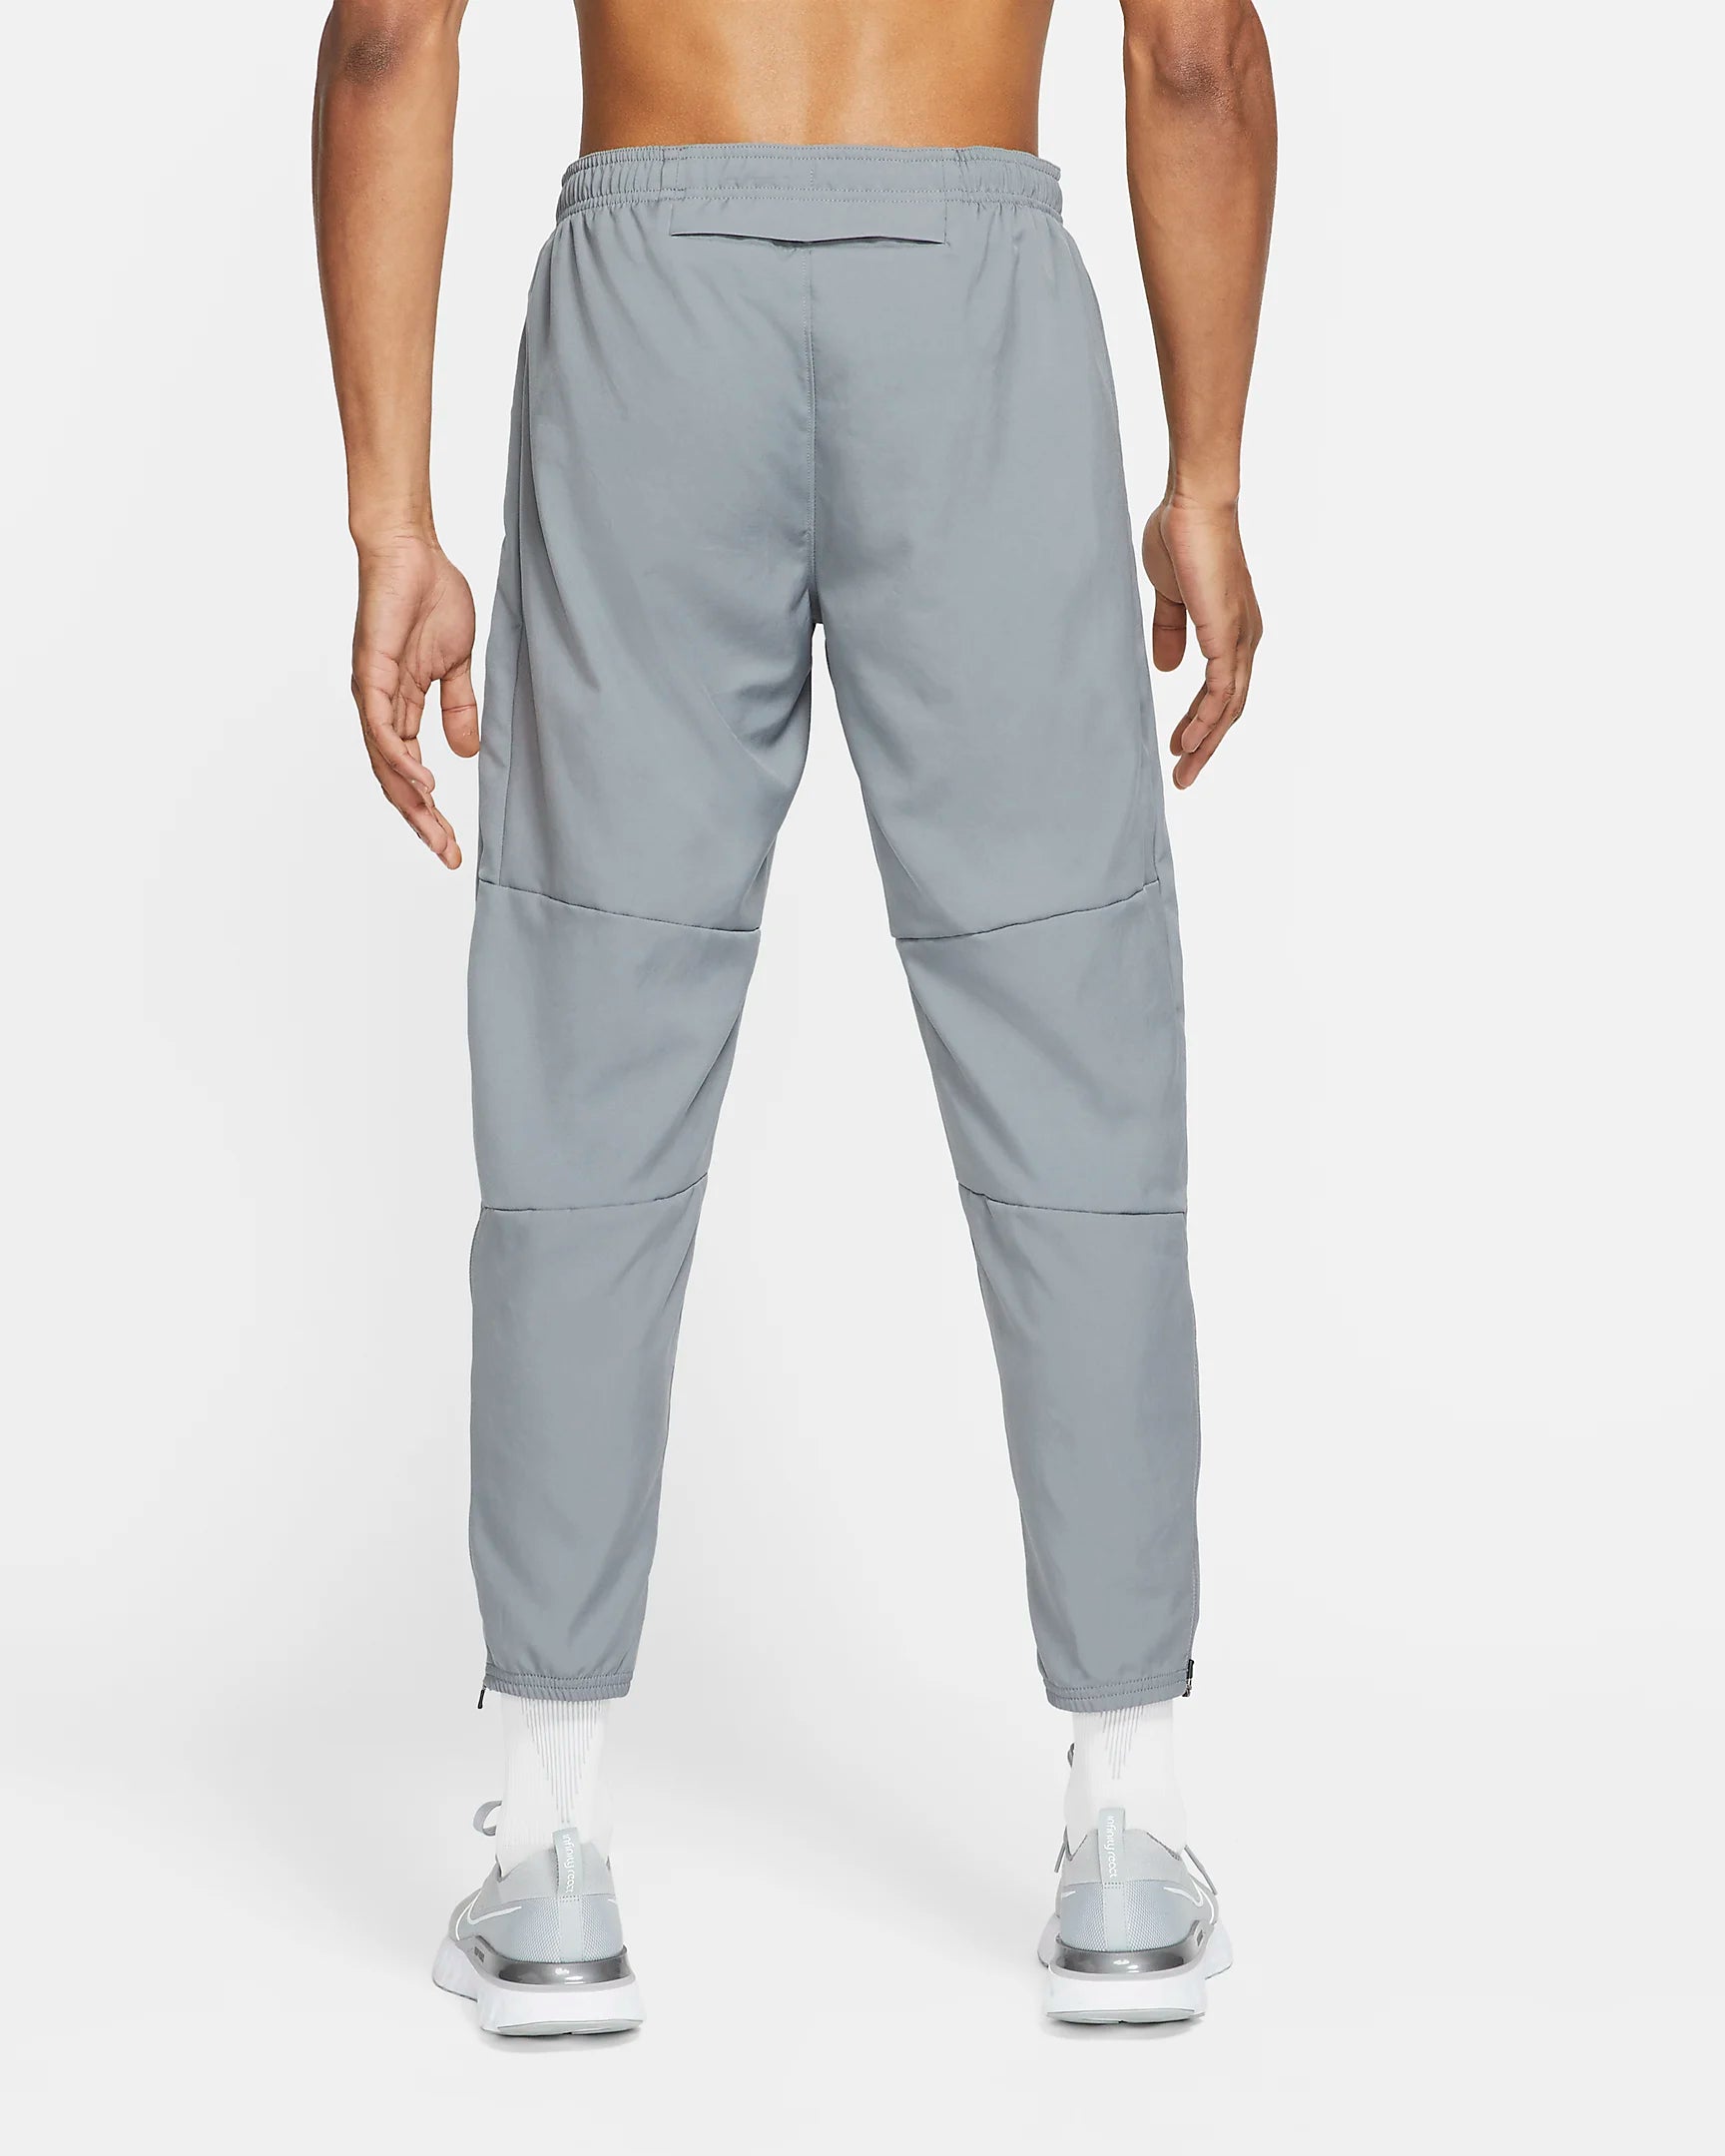 Nike Dri-FIT Challenger Pants - Gray